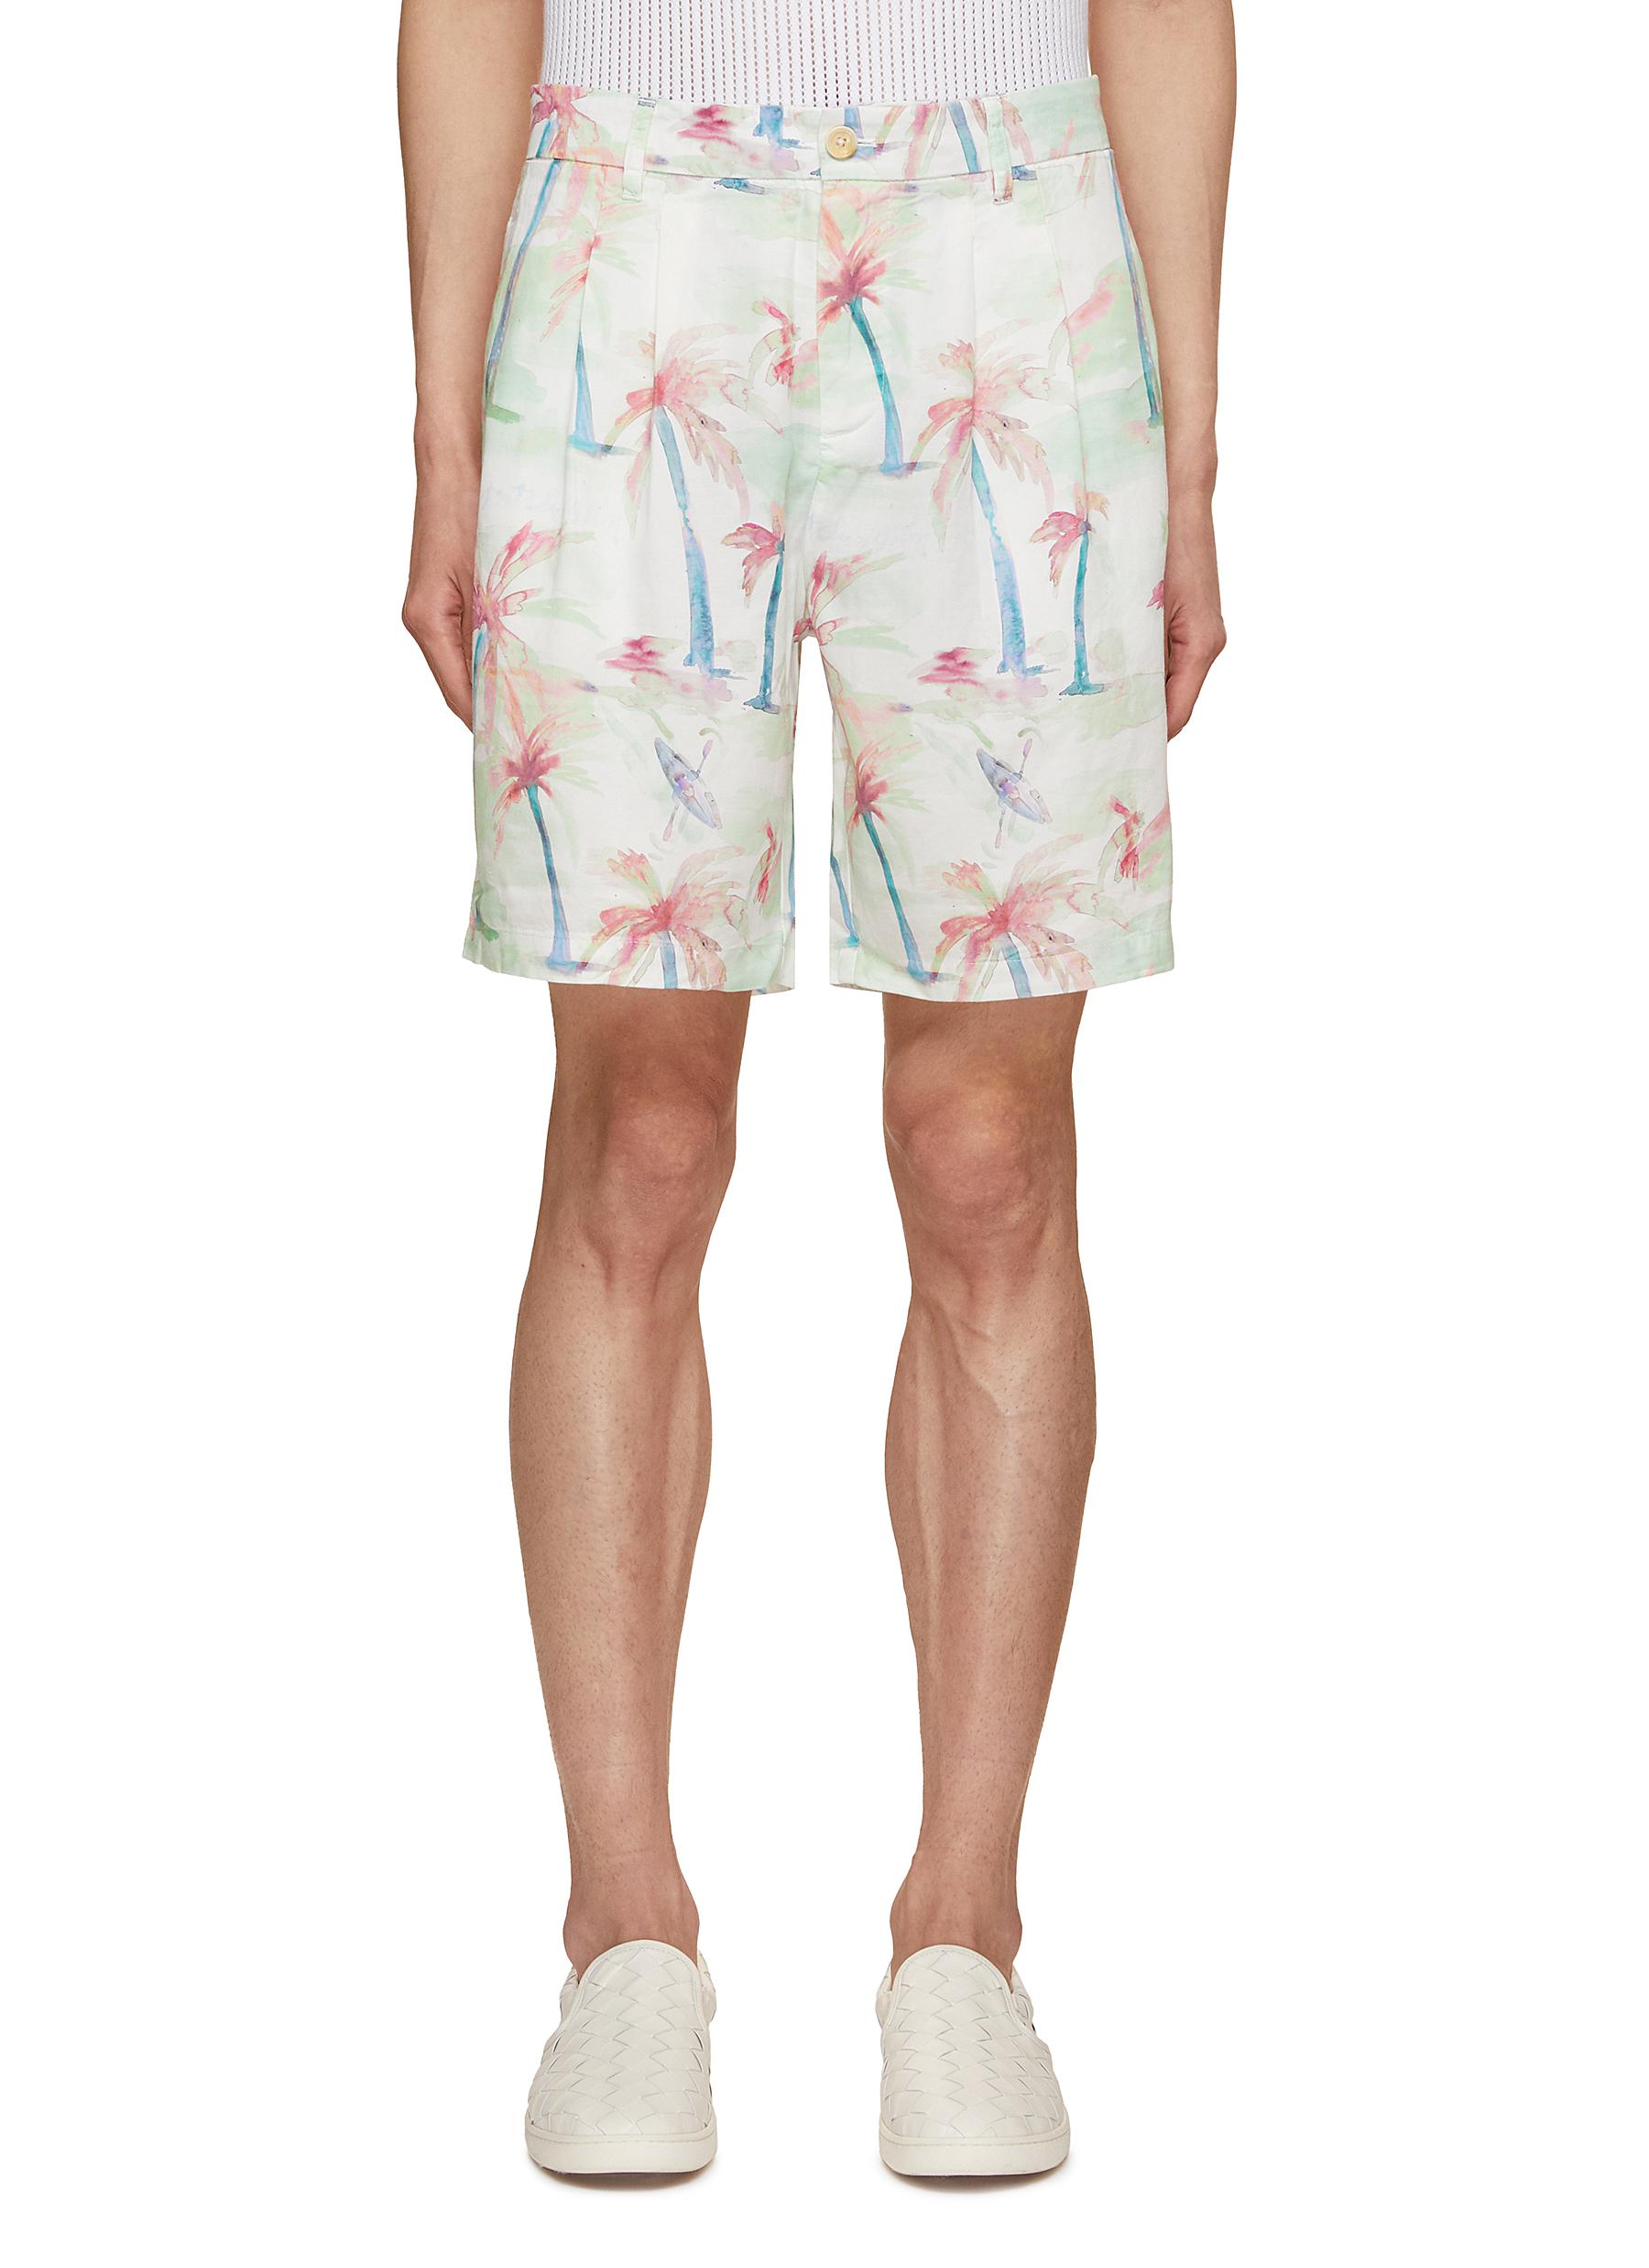 Pleated Bermuda Shorts